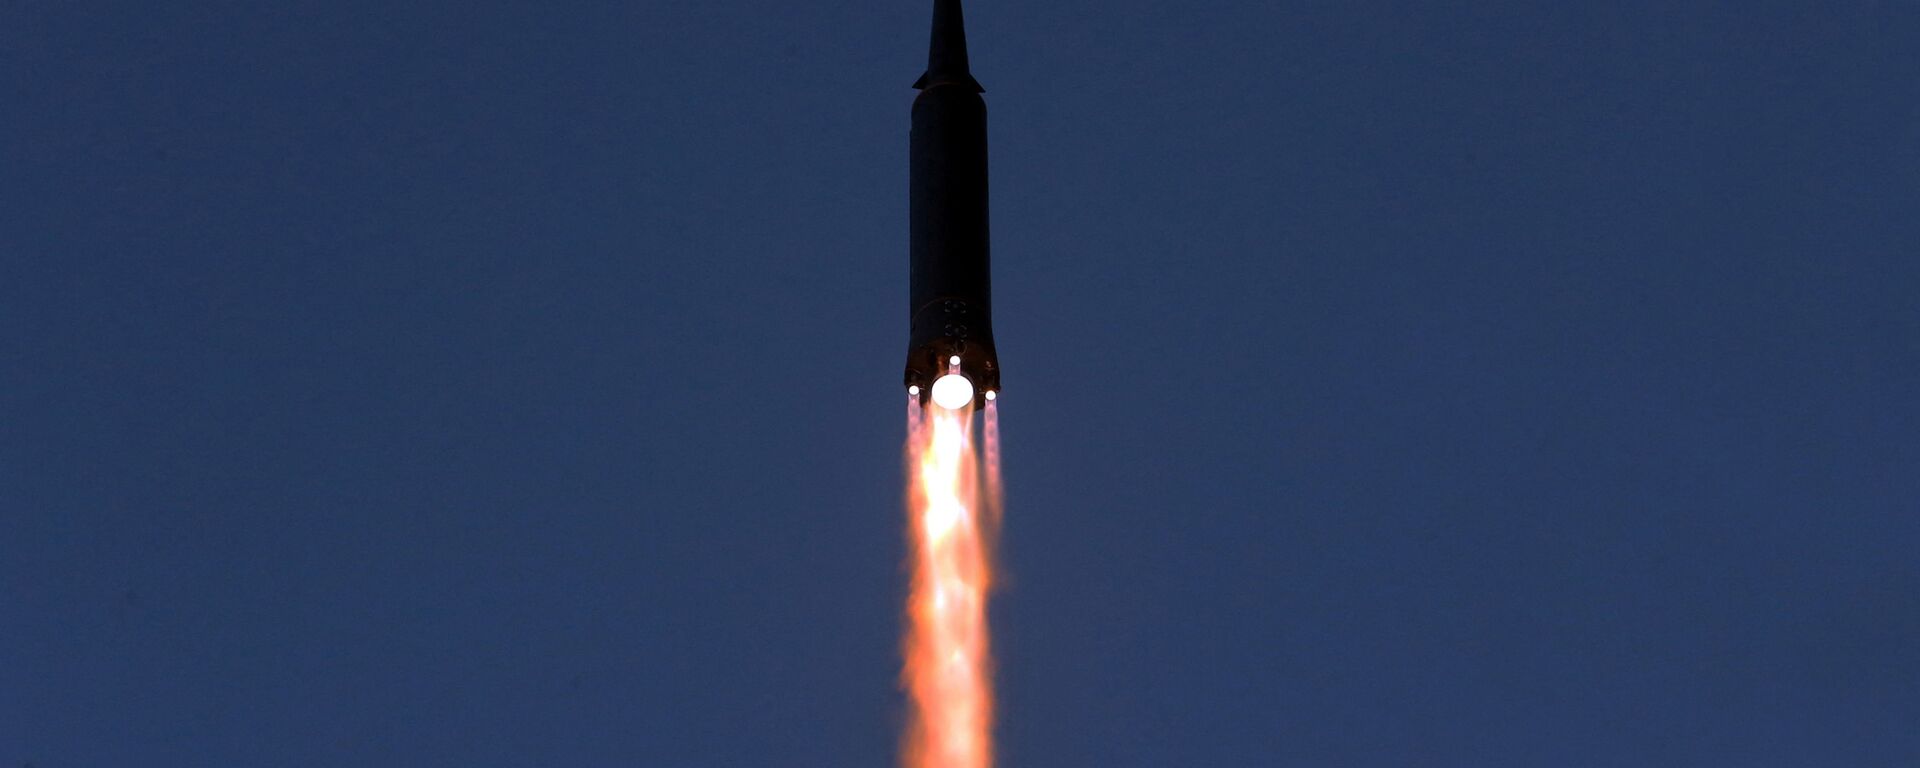 Запуск ракеты в КНДР  - 他竟然�]有再提要��, 1920, 12.01.2022